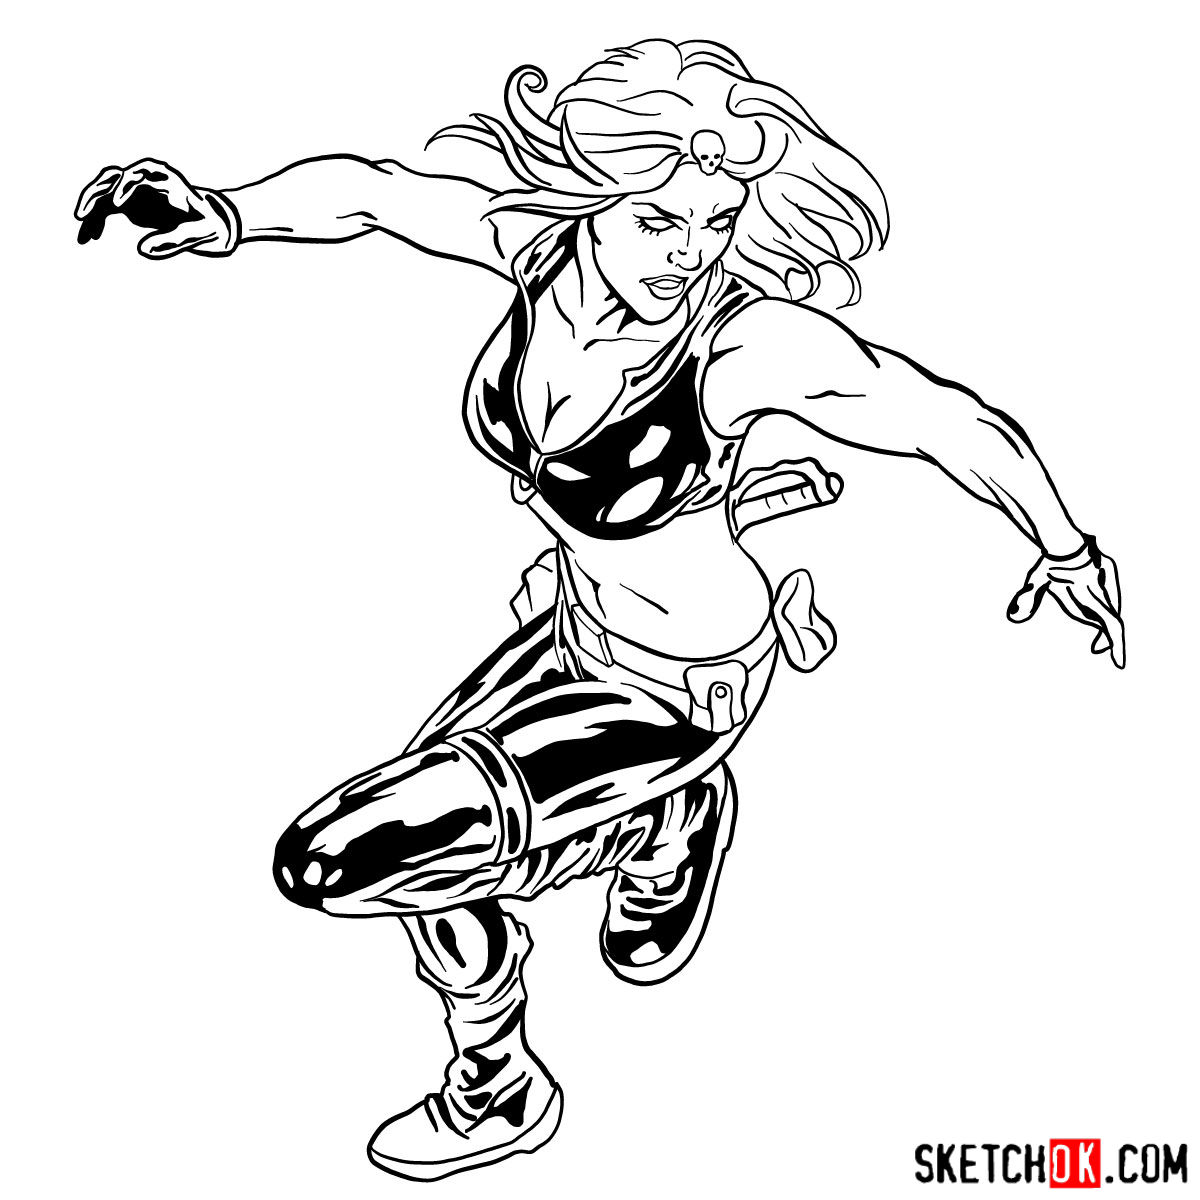 How to draw Mystique (Raven Darkhölme) from Marvel X-Men comics - step 20